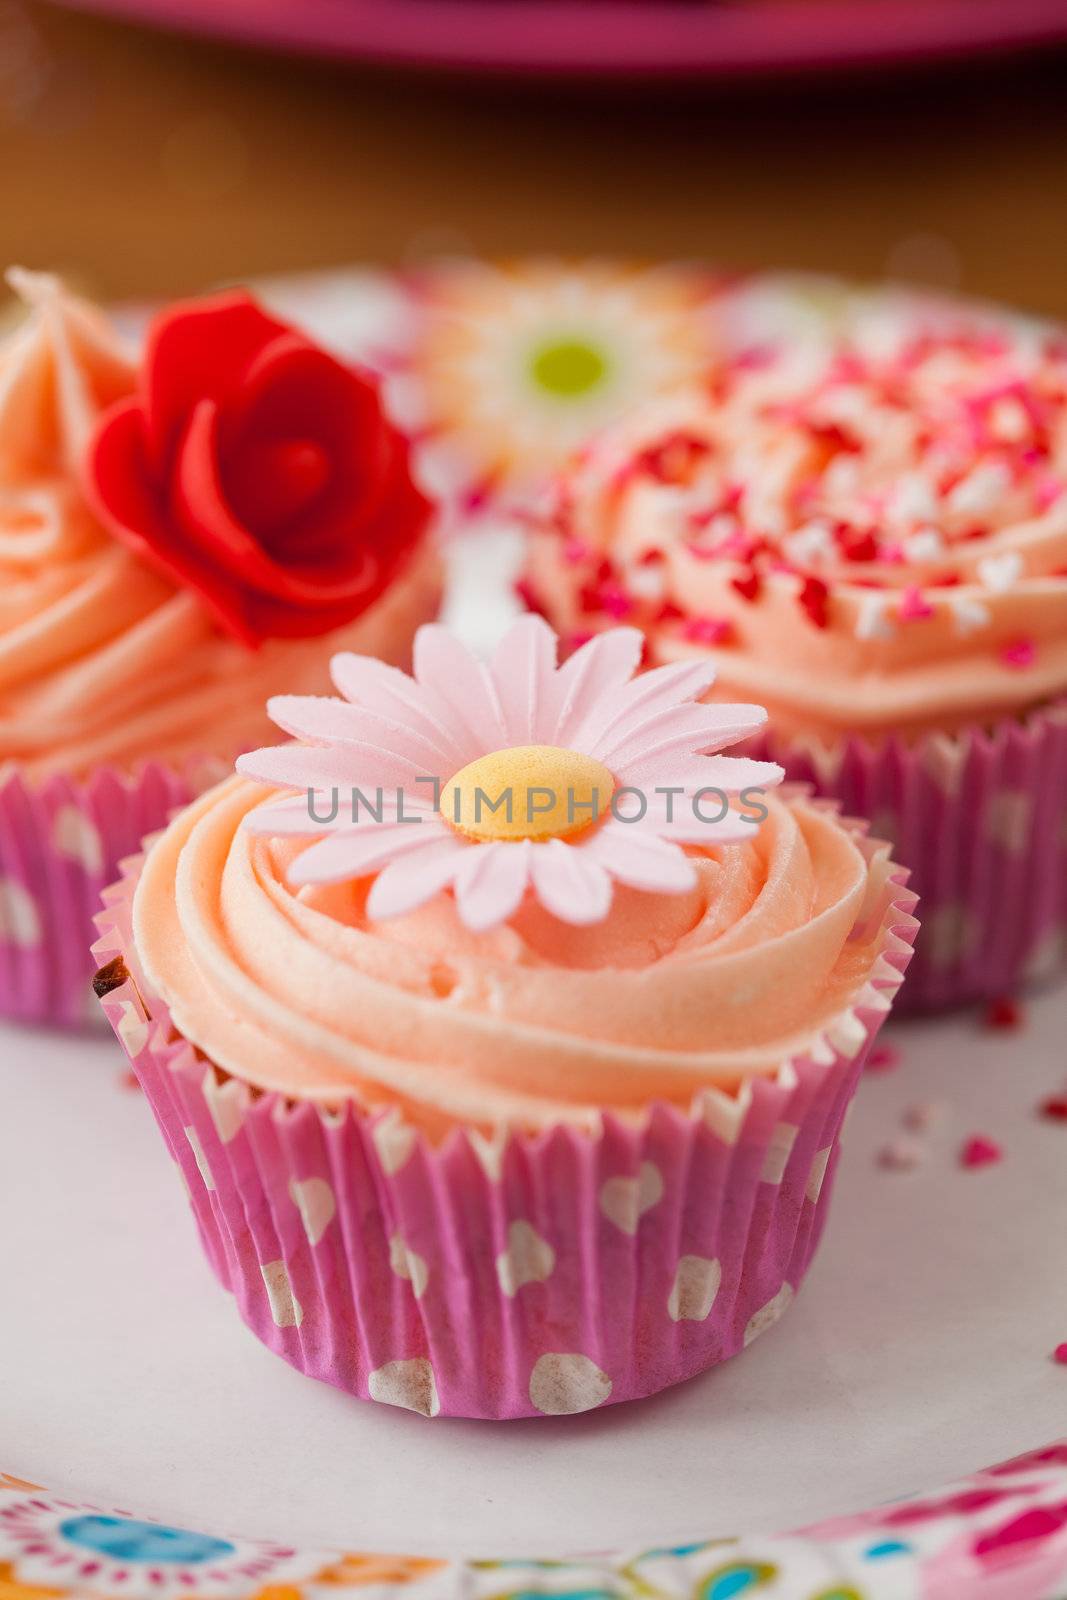 Birthday cupcake by Fotosmurf